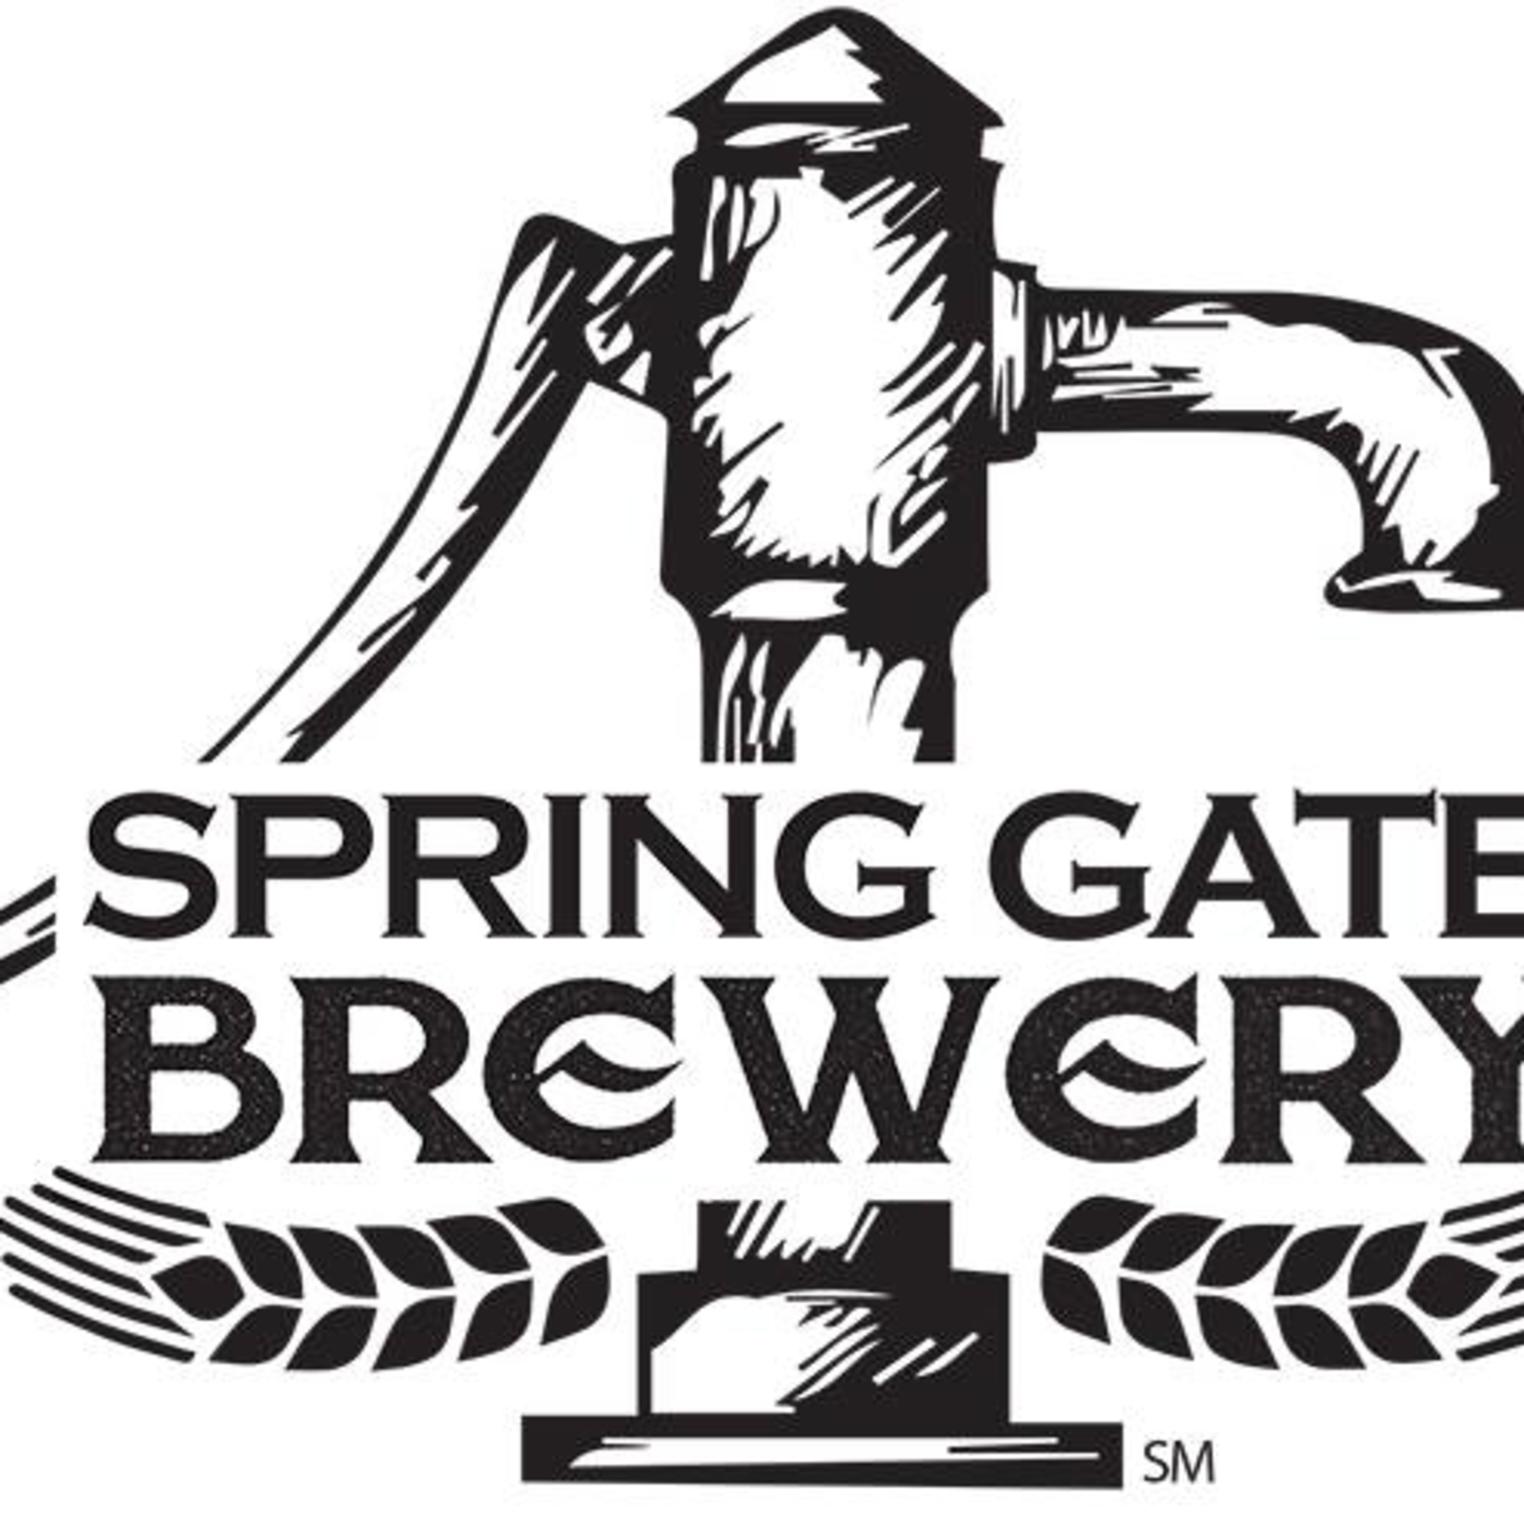 Spring Gate Brewery